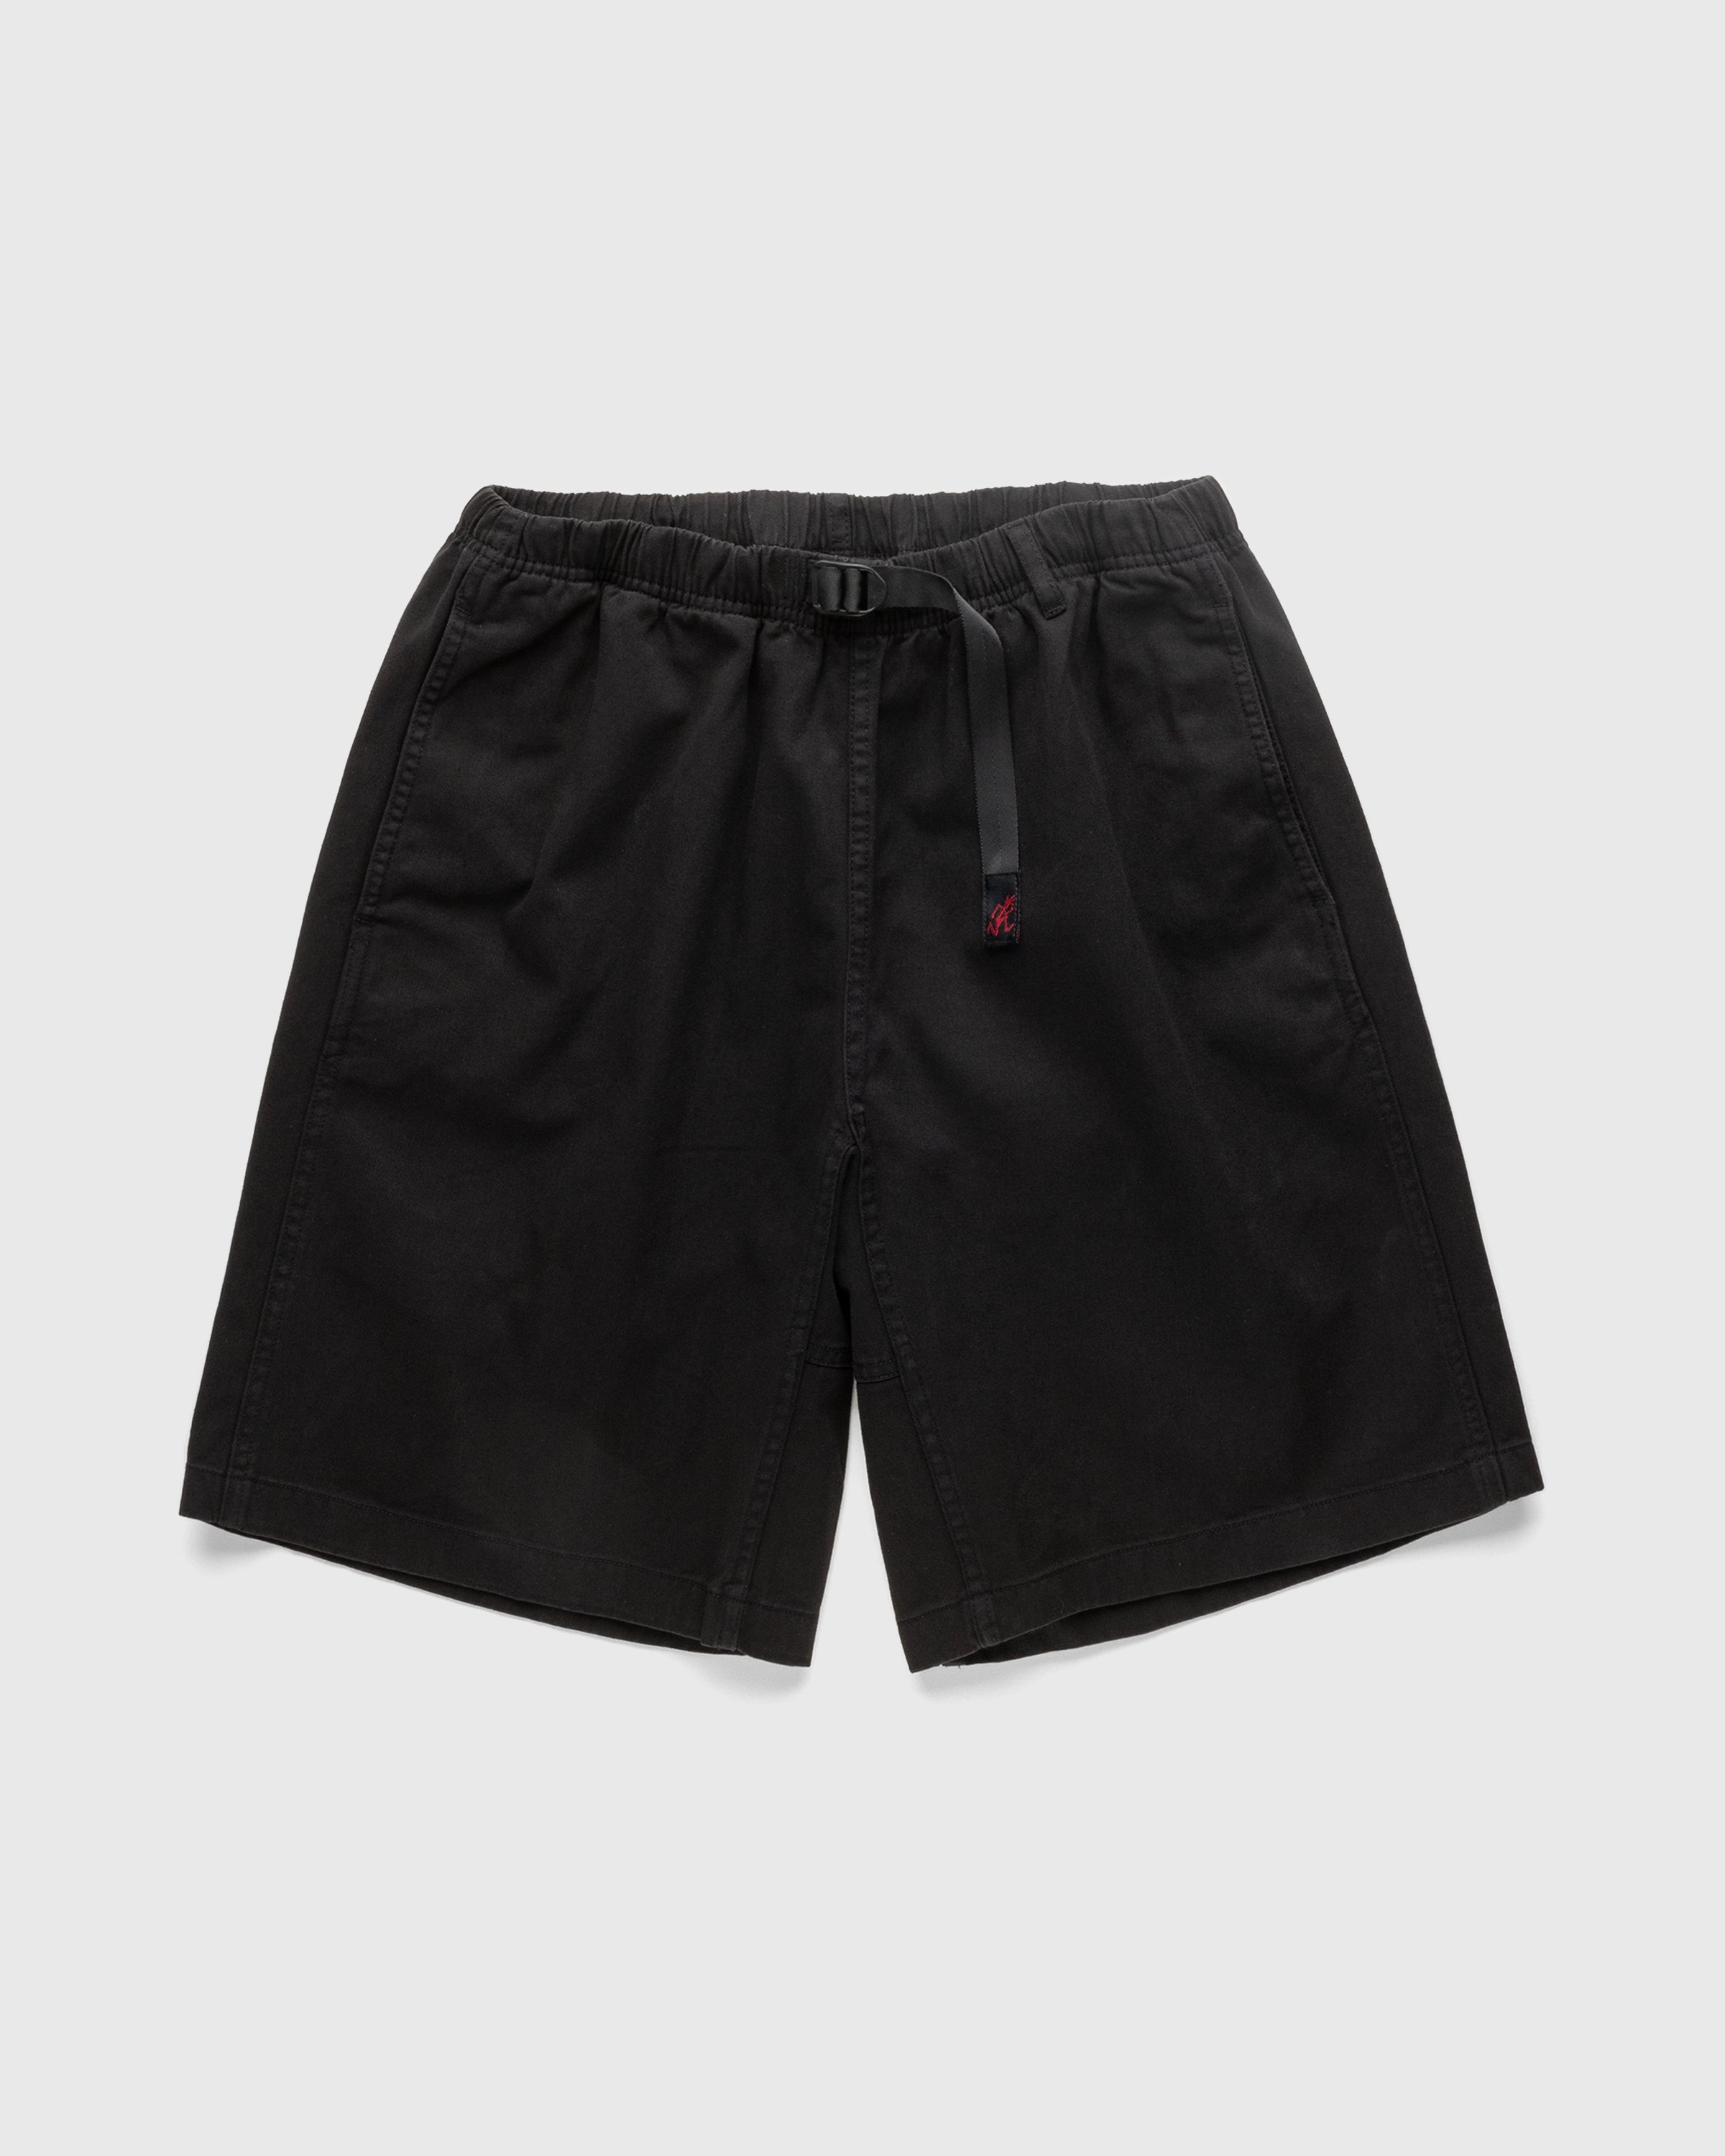 Gramicci – G-Shorts Black - Shorts - Black - Image 1